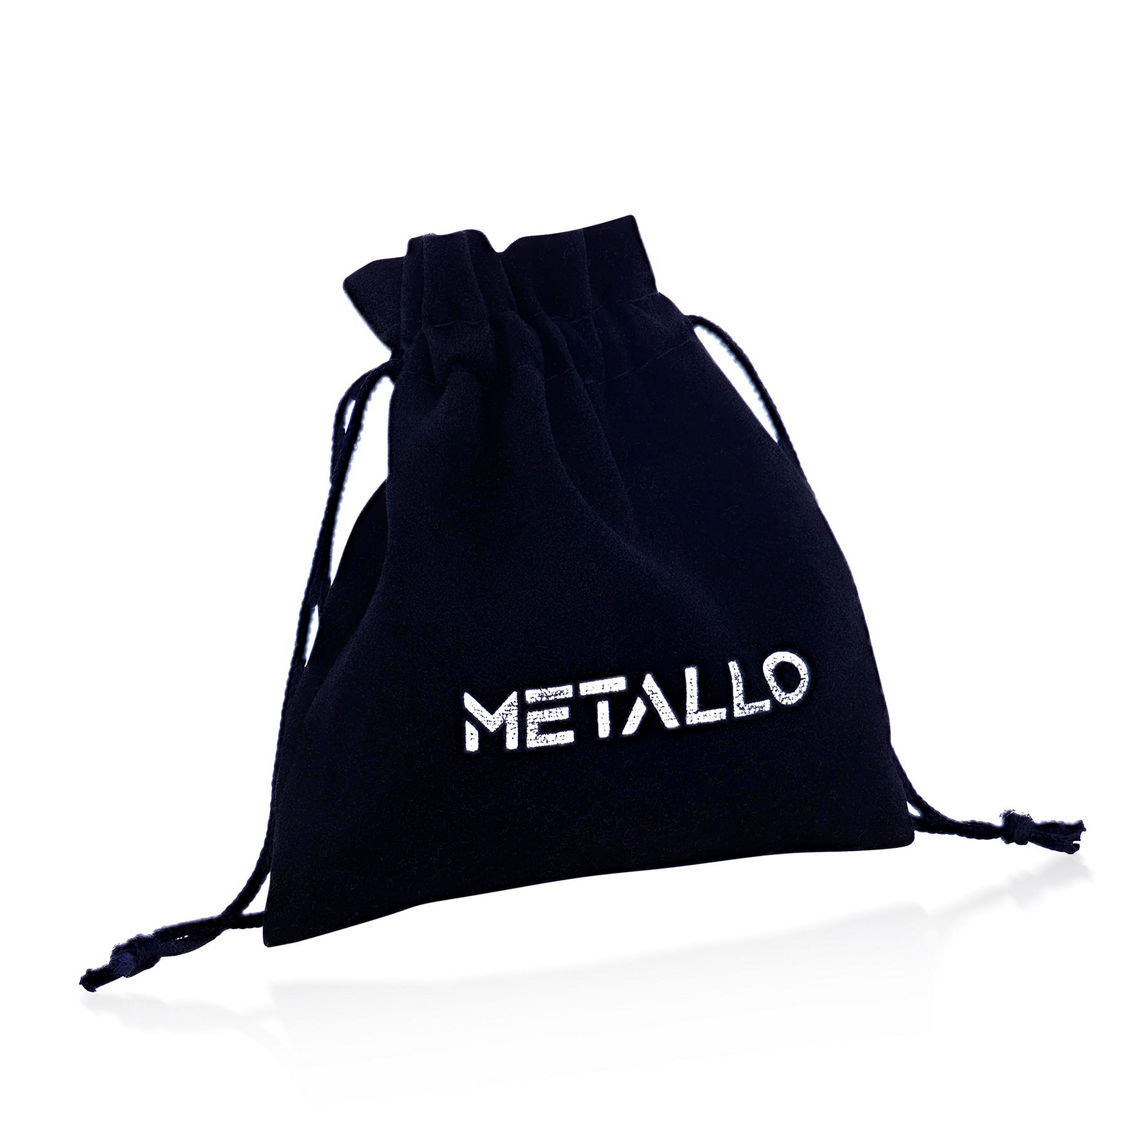 Metallo Stainless Steel Cross Style Earrings - Black Plated - Image 2 of 2